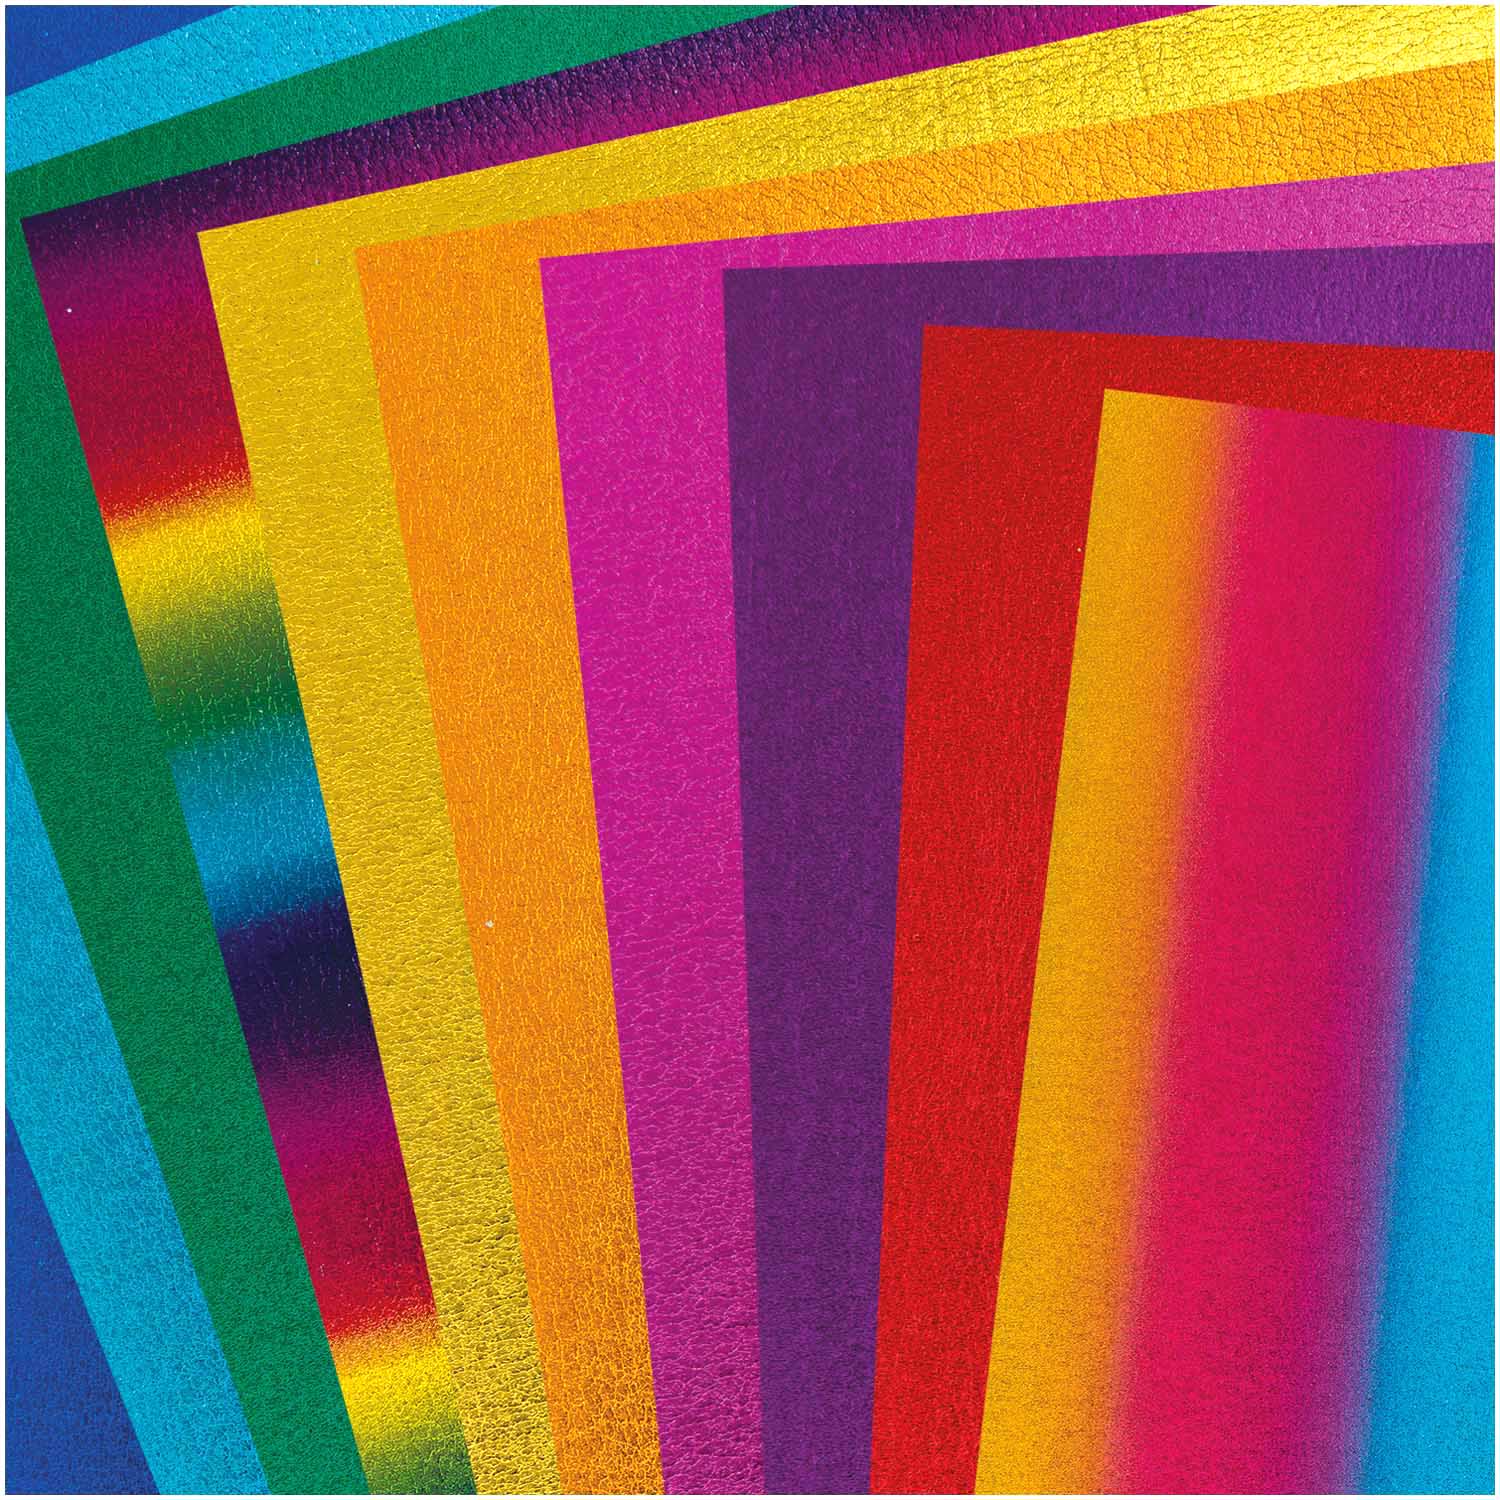 Moosgummi-Platten metallic Set Rainbow 10 Blätter A420x30cm